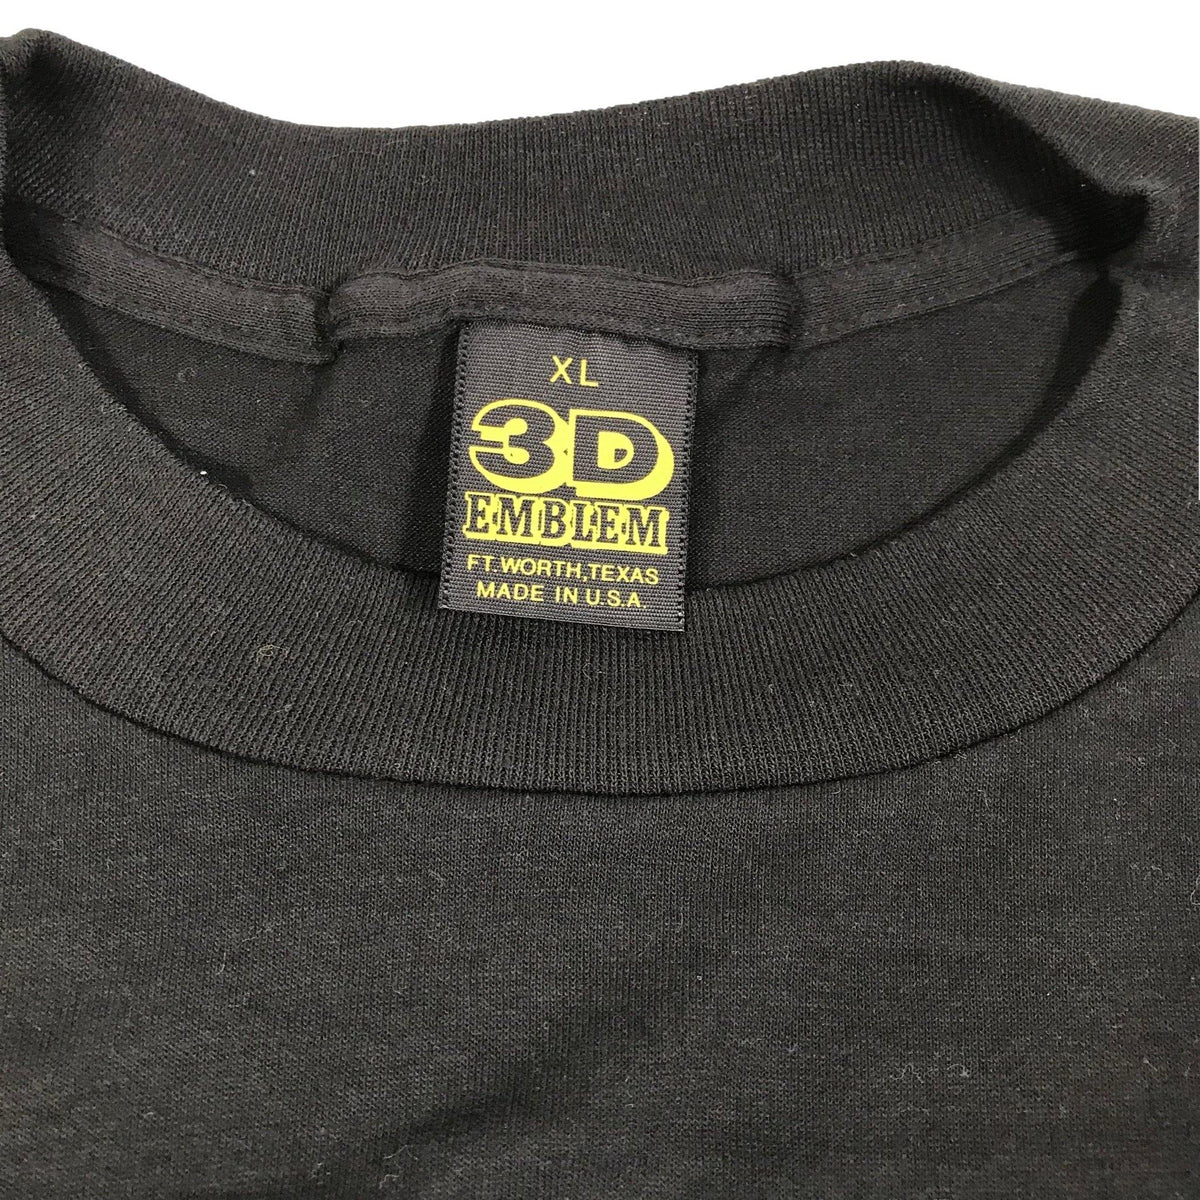 Vintage Orignal 3D Emblem Lean Mean Fighting Machine T Shirt Tag